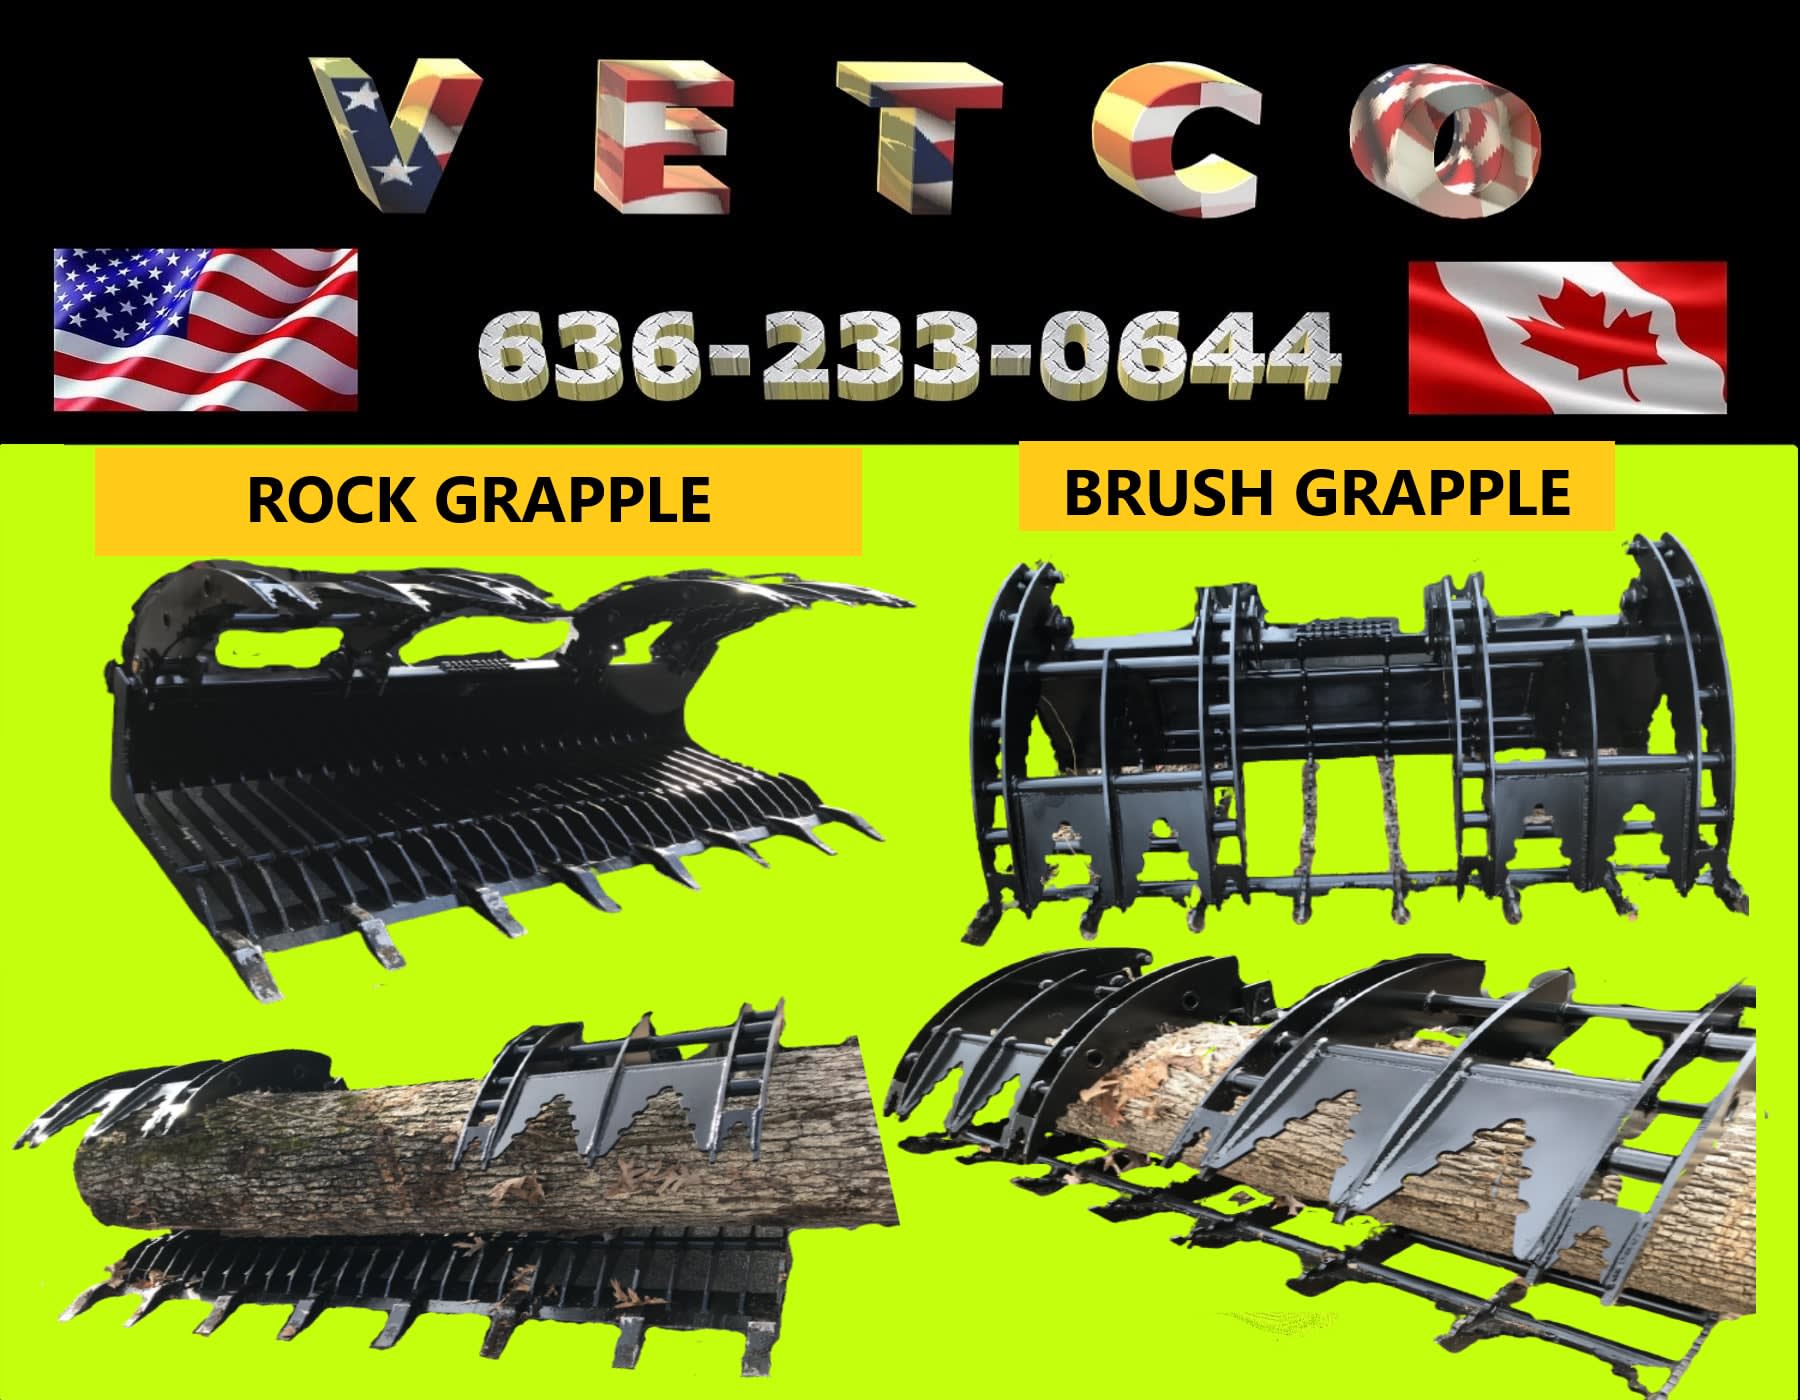 veteranequipment.com